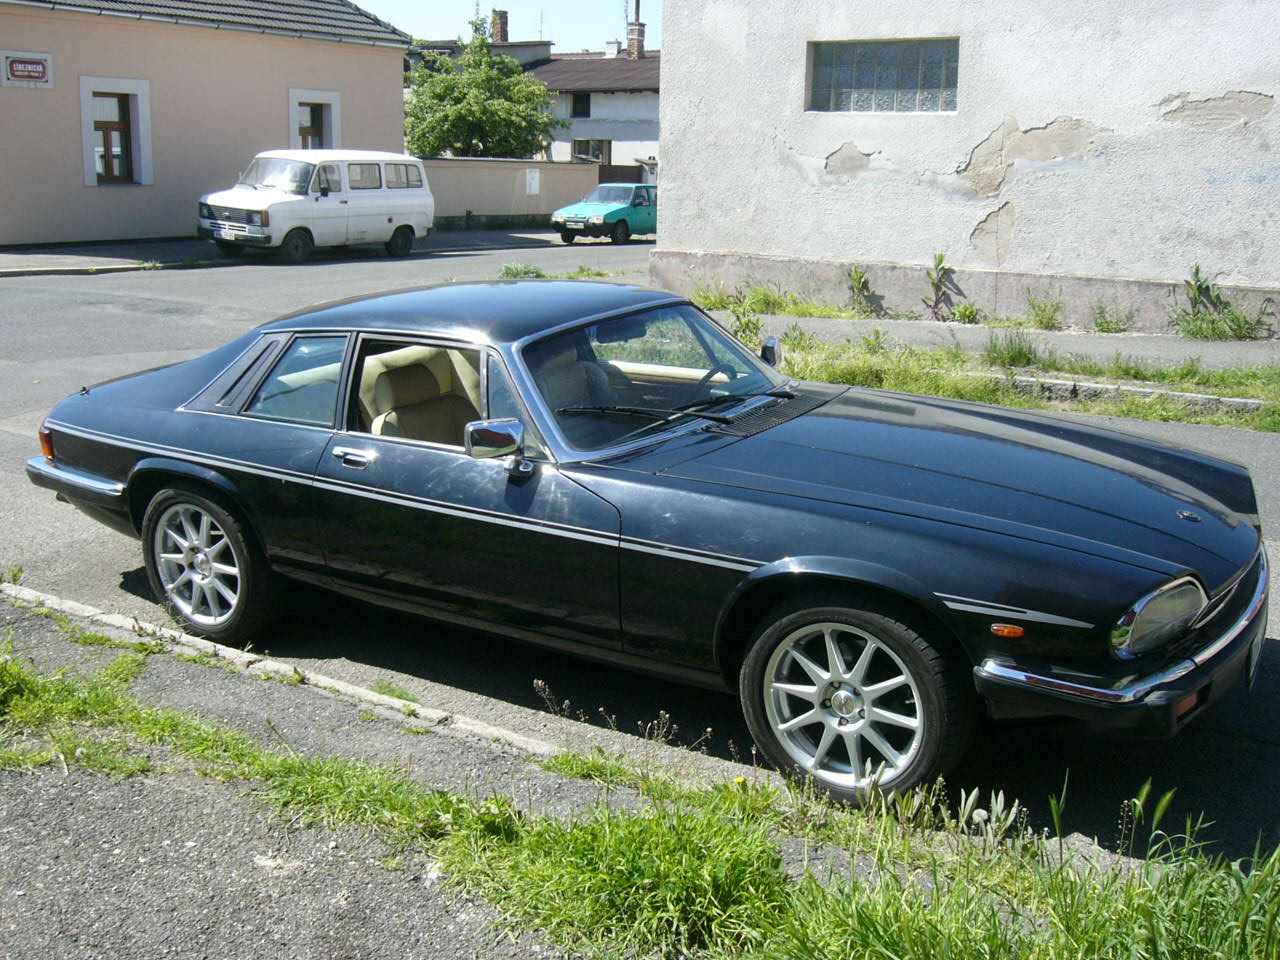 Jaguar XJS HE